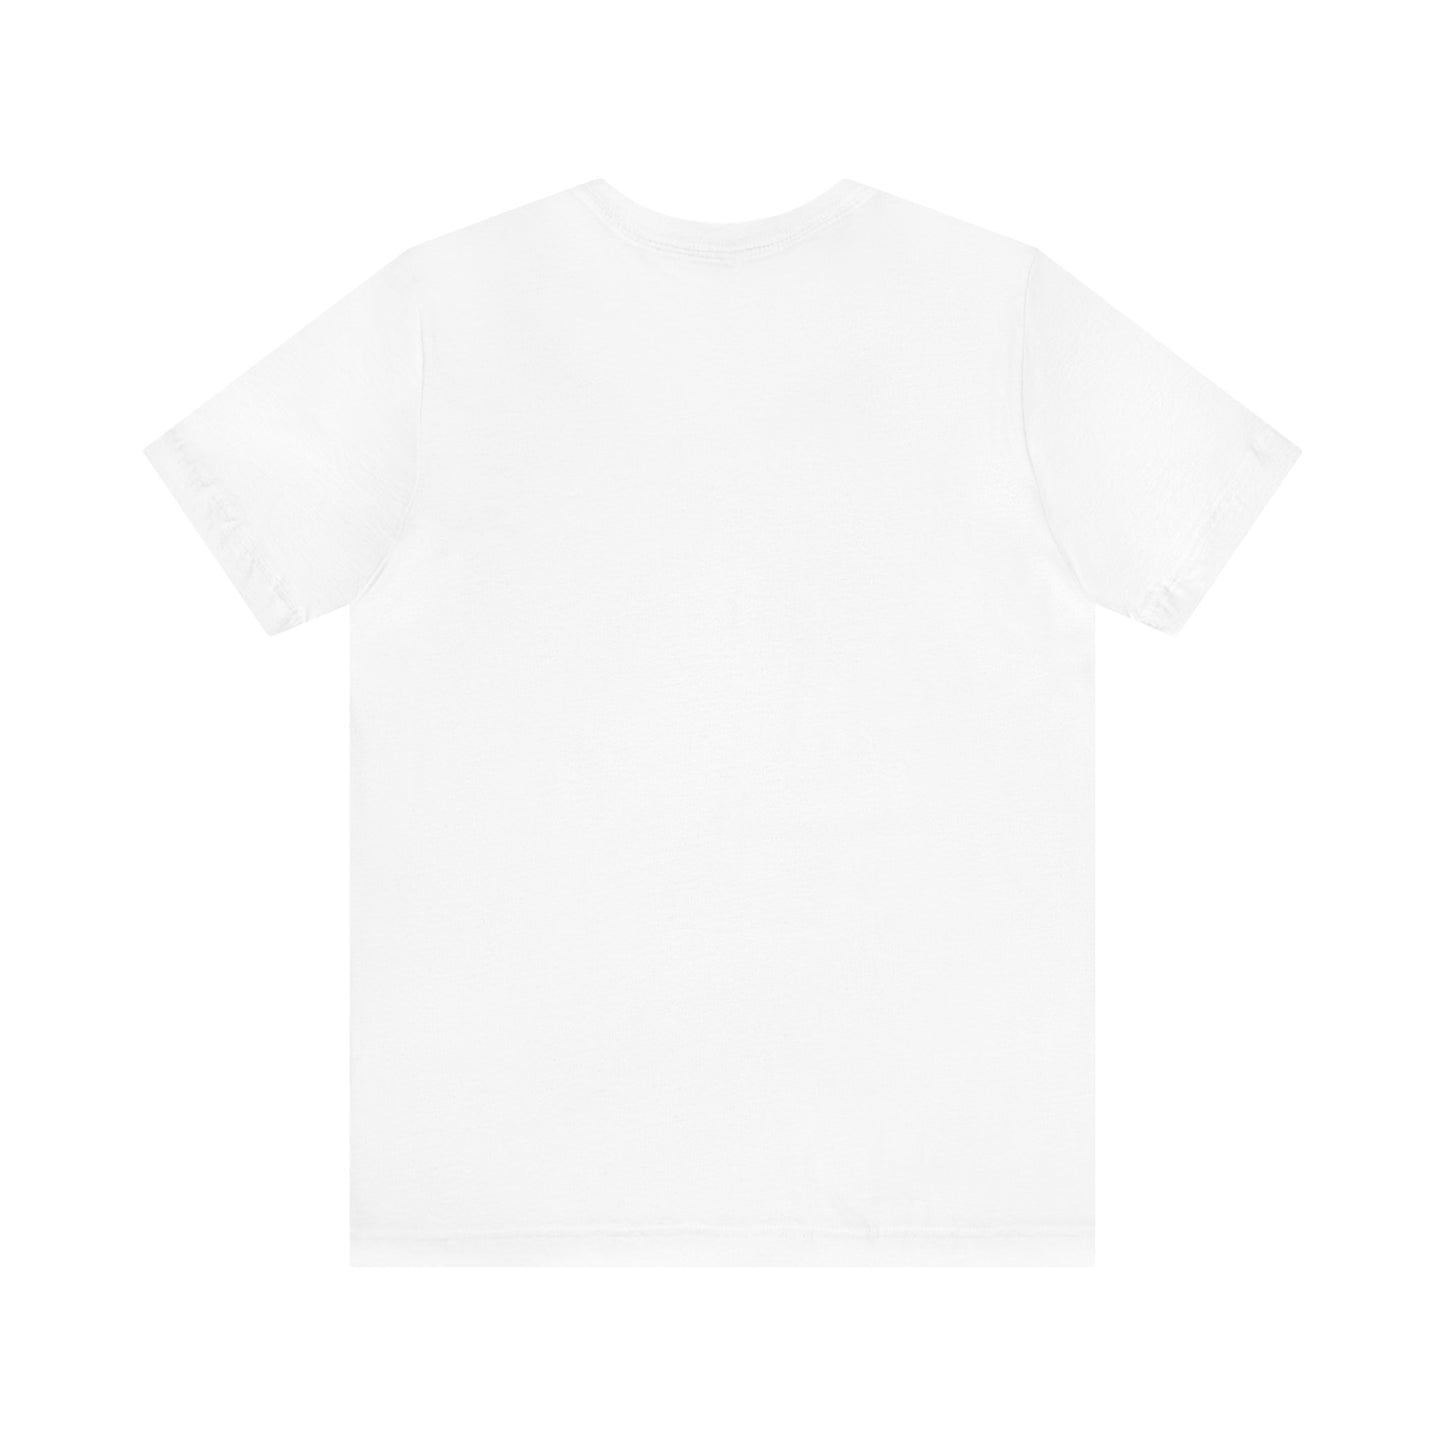 David Glitched Unisex T-Shirt